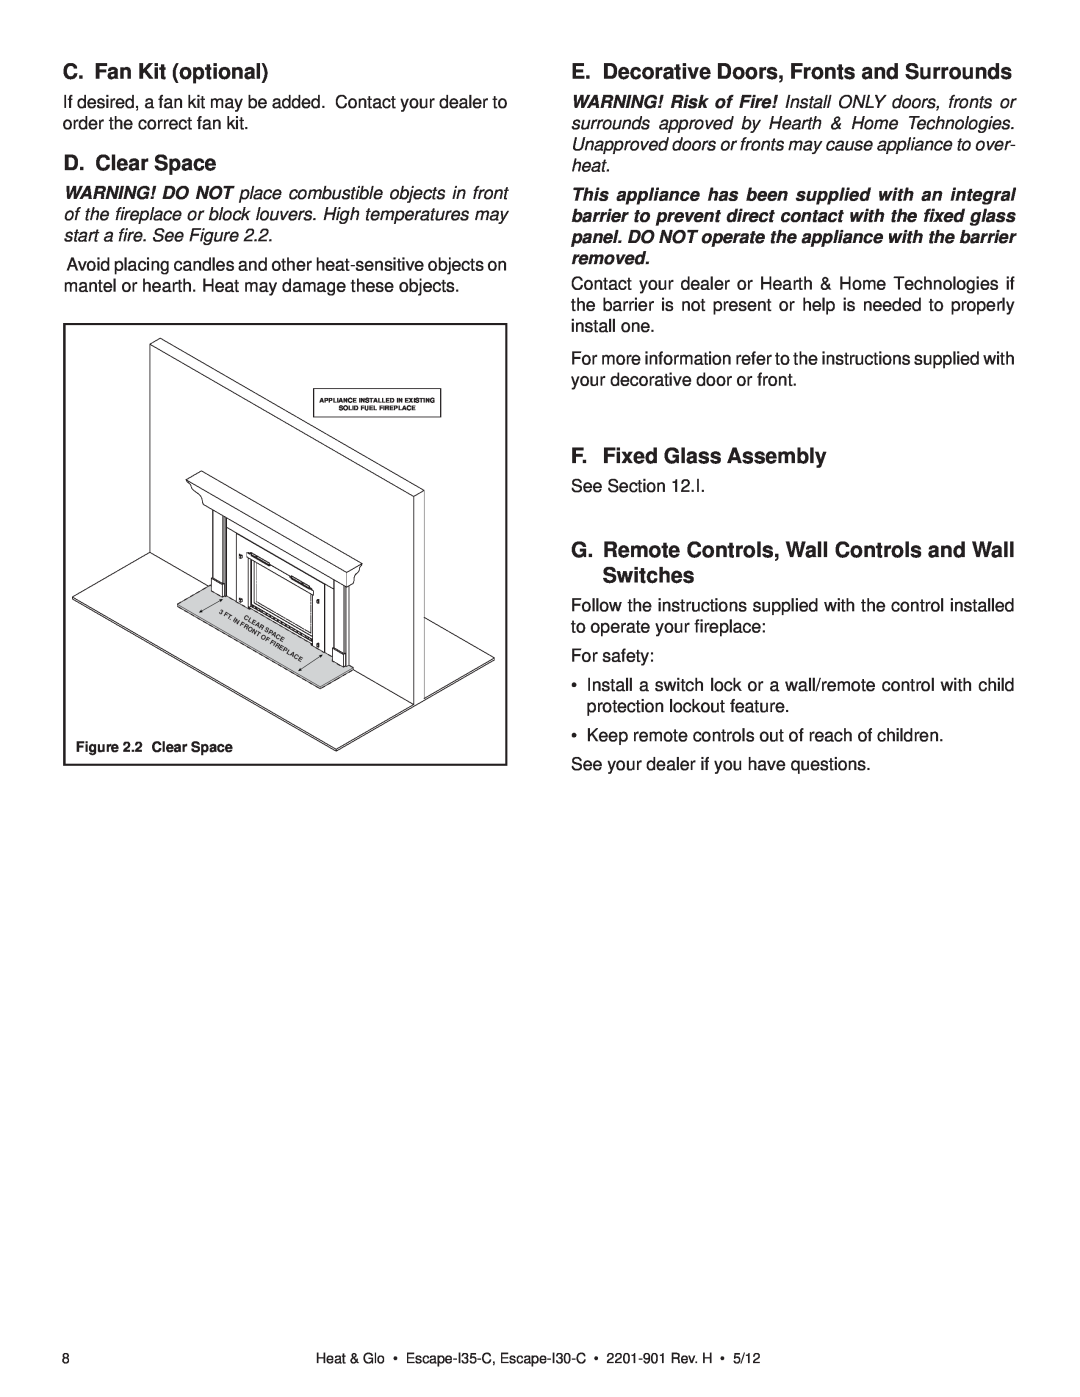 Heat & Glo LifeStyle ESCAPE-I35-C C. Fan Kit optional, D. Clear Space, E. Decorative Doors, Fronts and Surrounds 